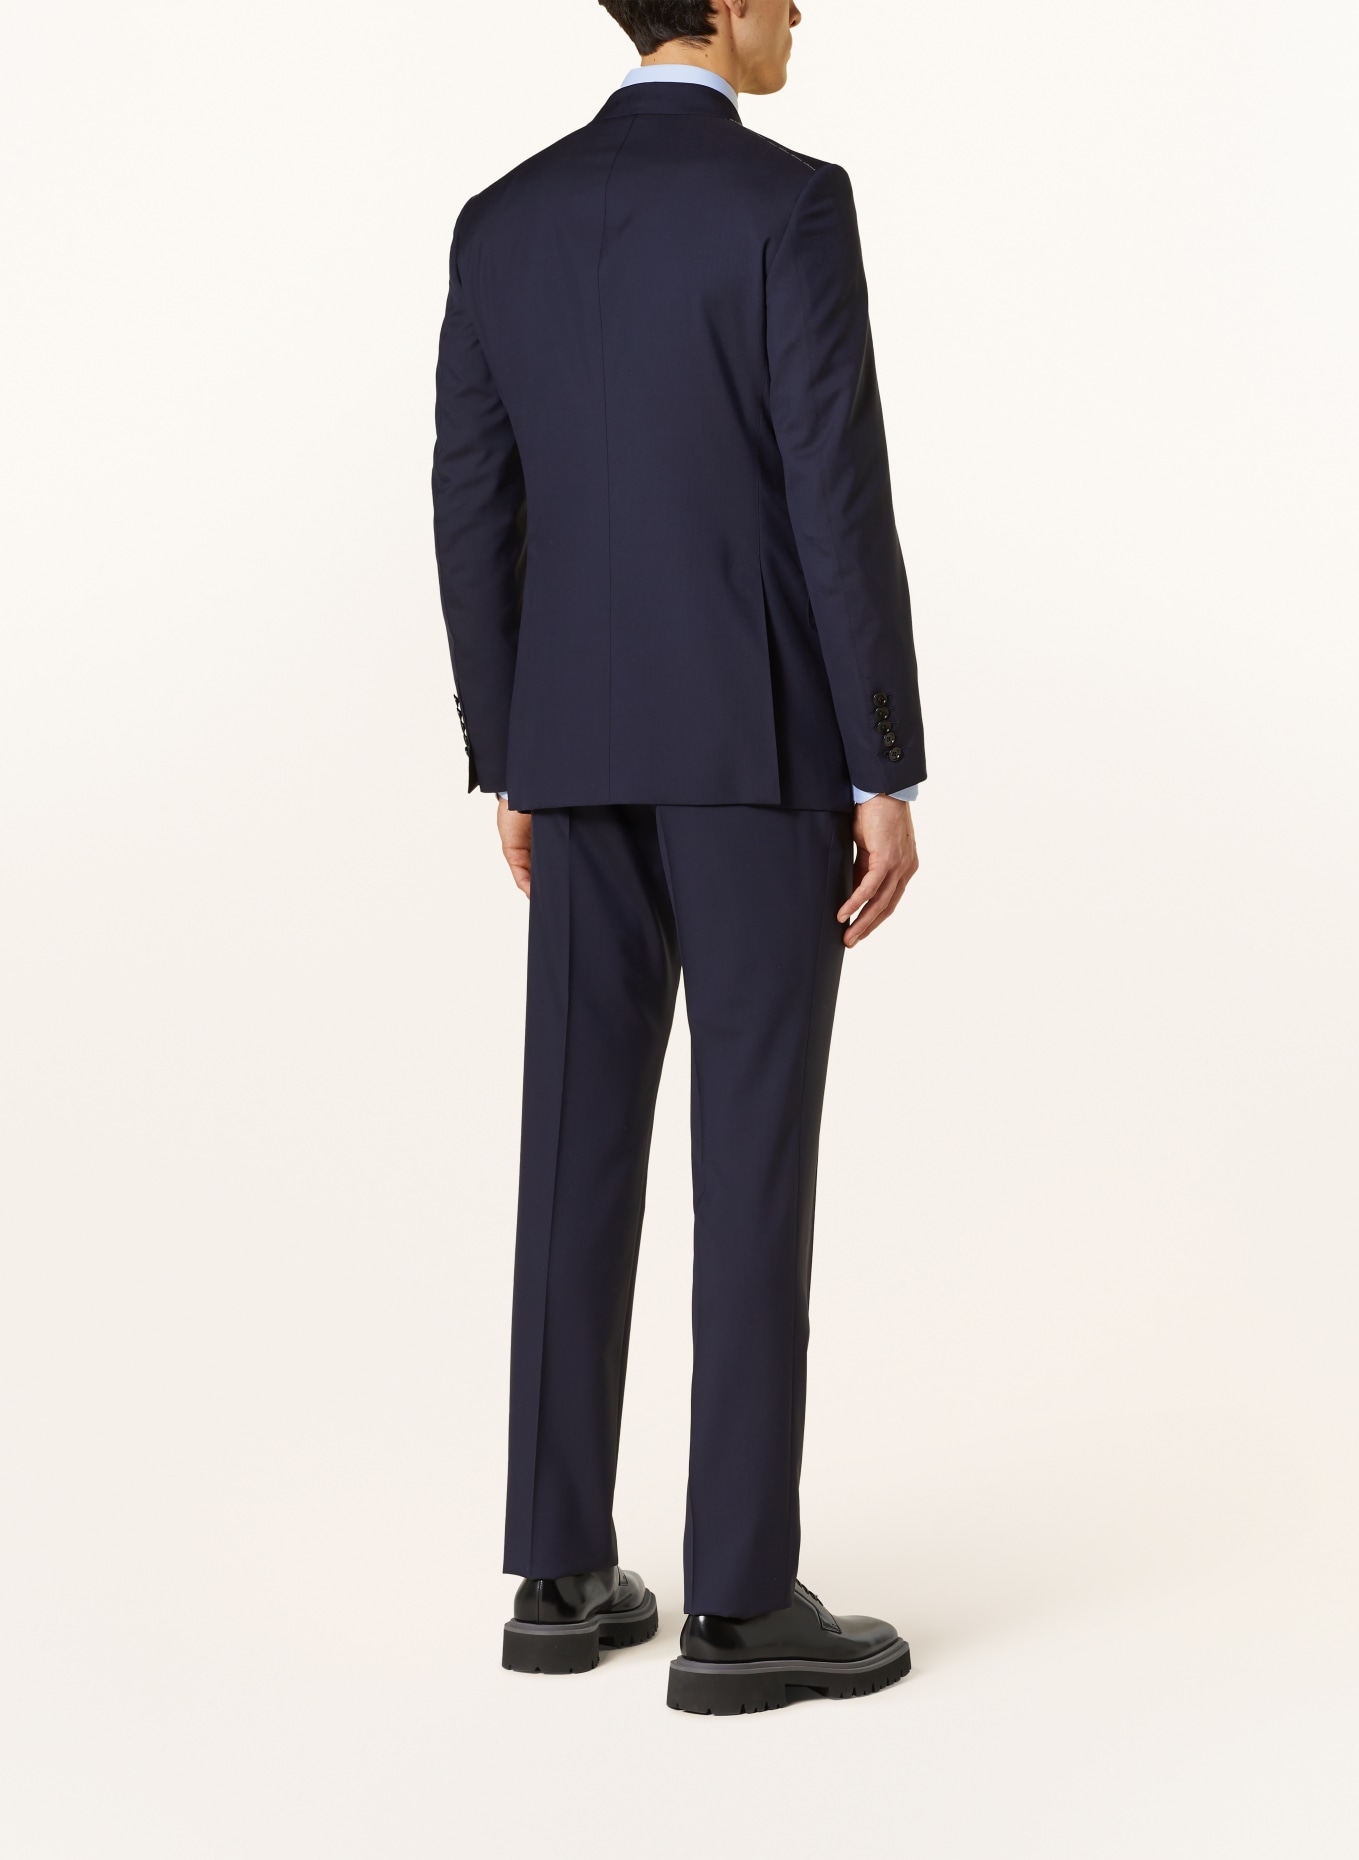 TOM FORD Anzug SHELTON Extra Slim Fit, Farbe: HB740 MIDNIGHT BLEU (Bild 3)